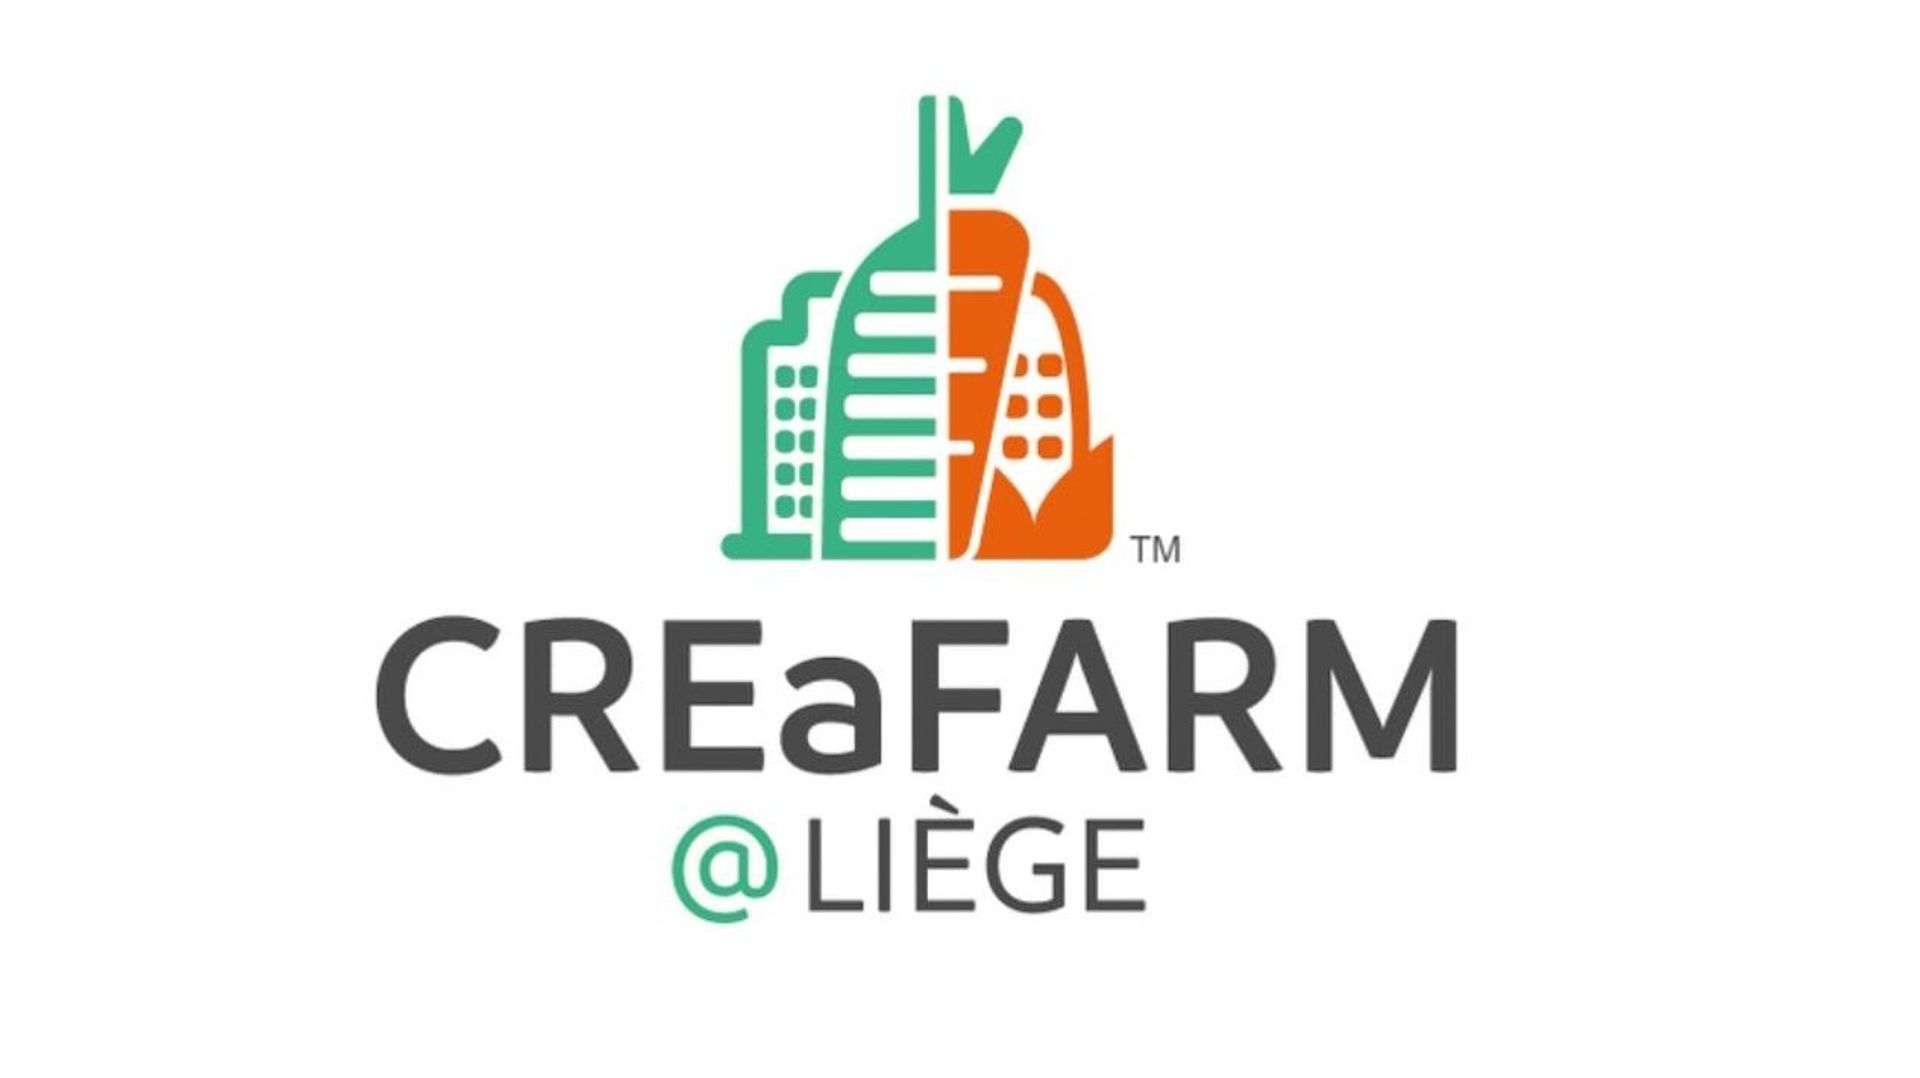 Le logo de Créafarm